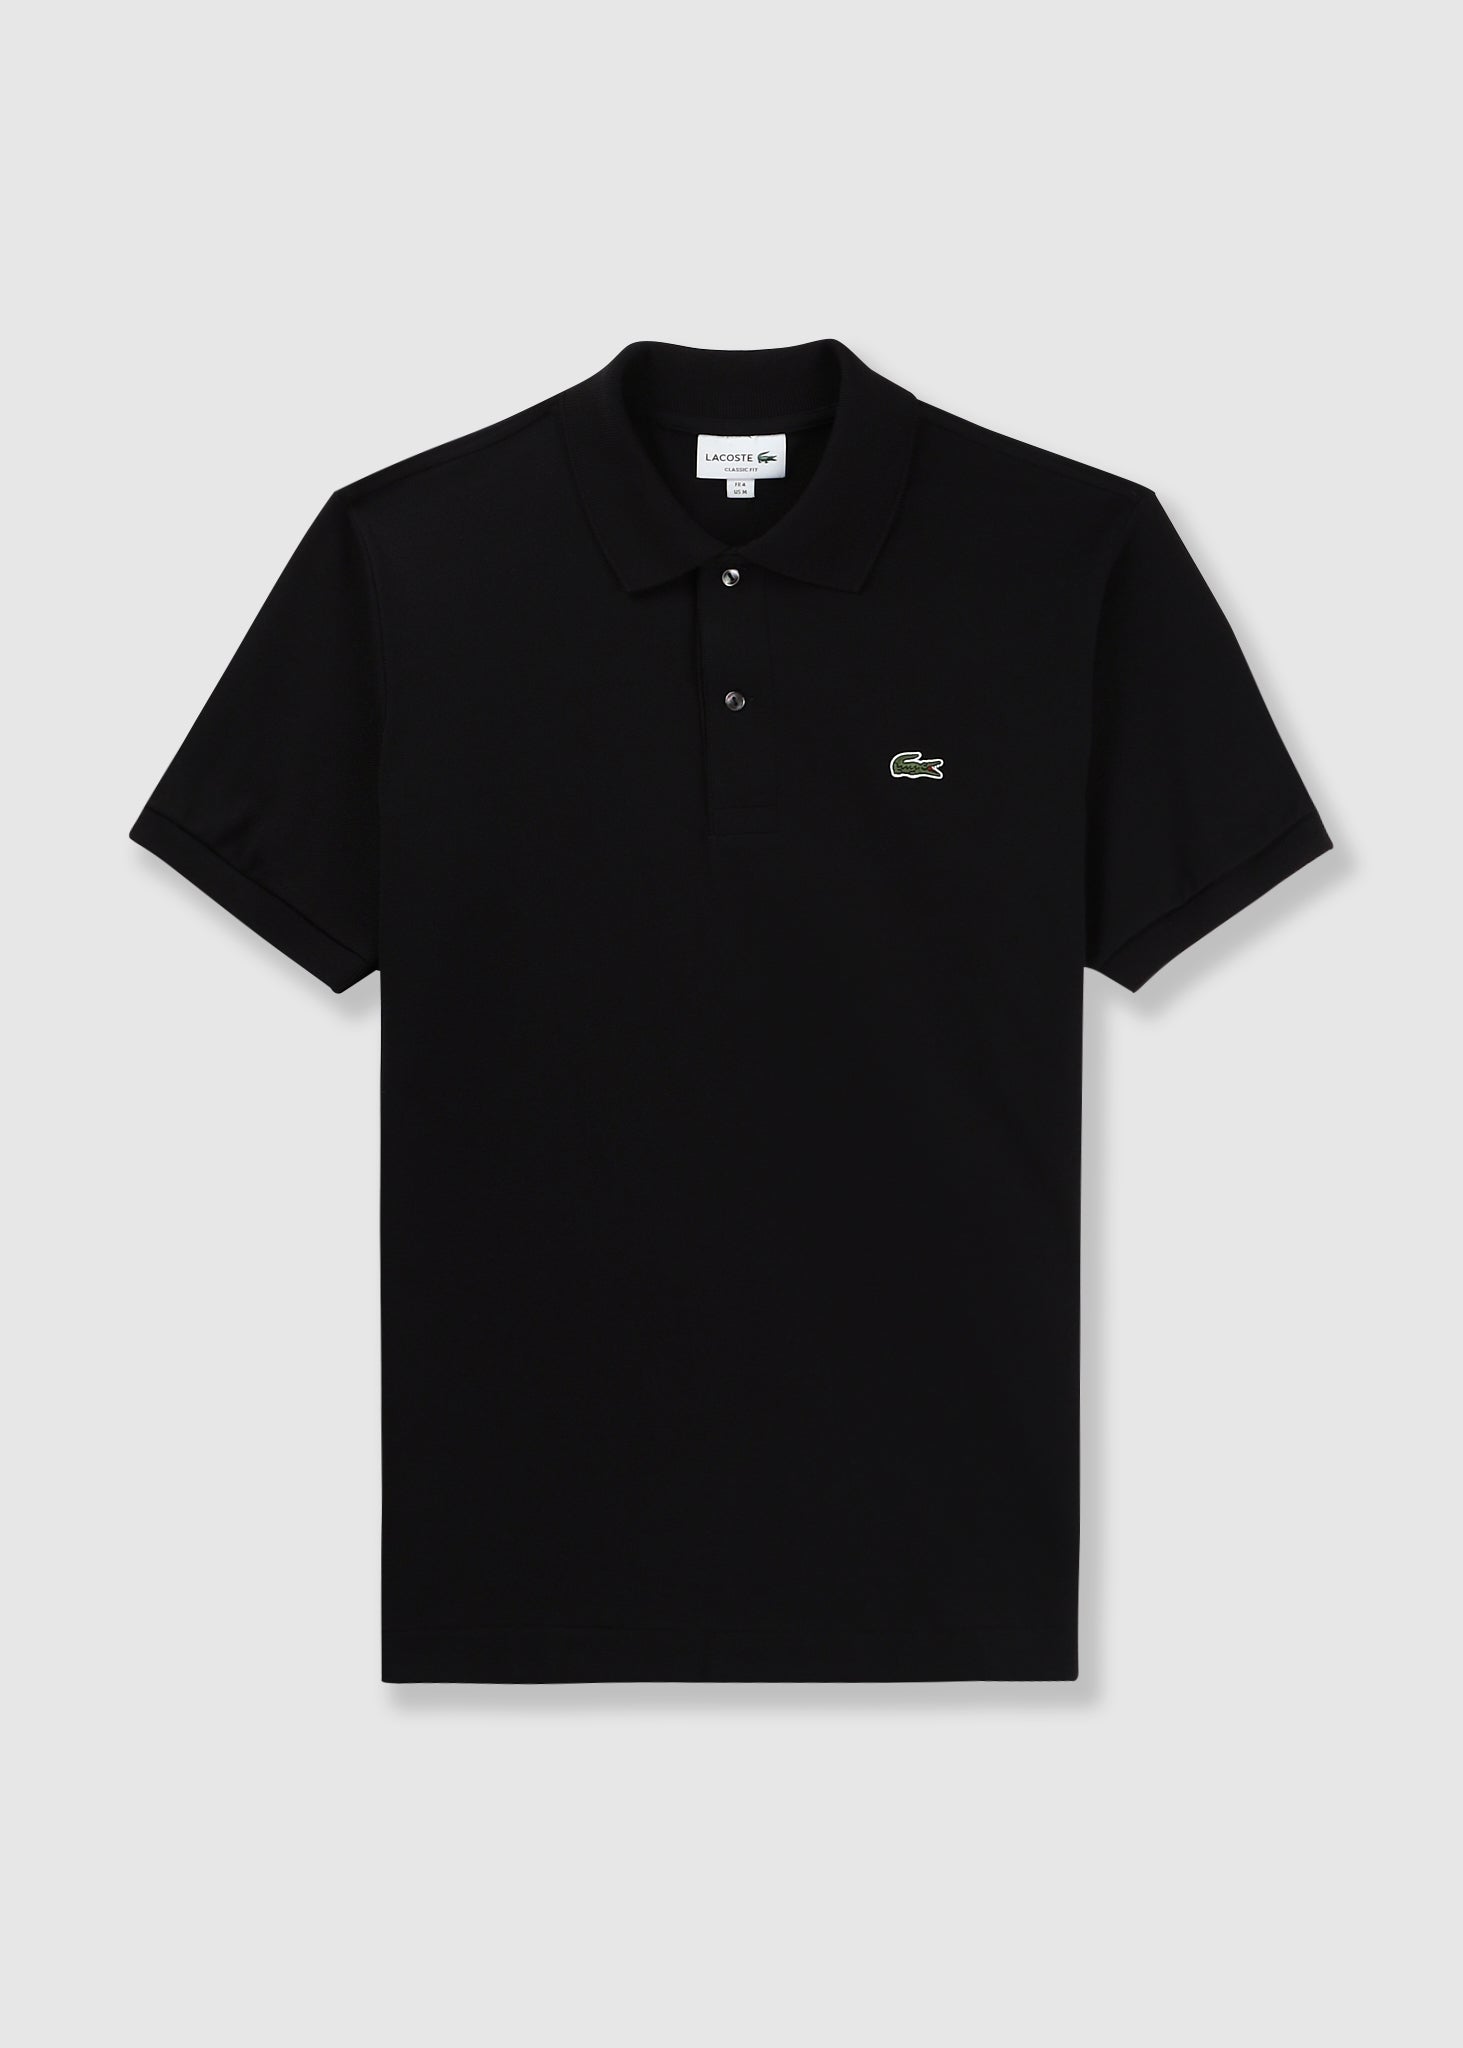 Lacoste Mens Classic Pique Poloshirt In Black - Black